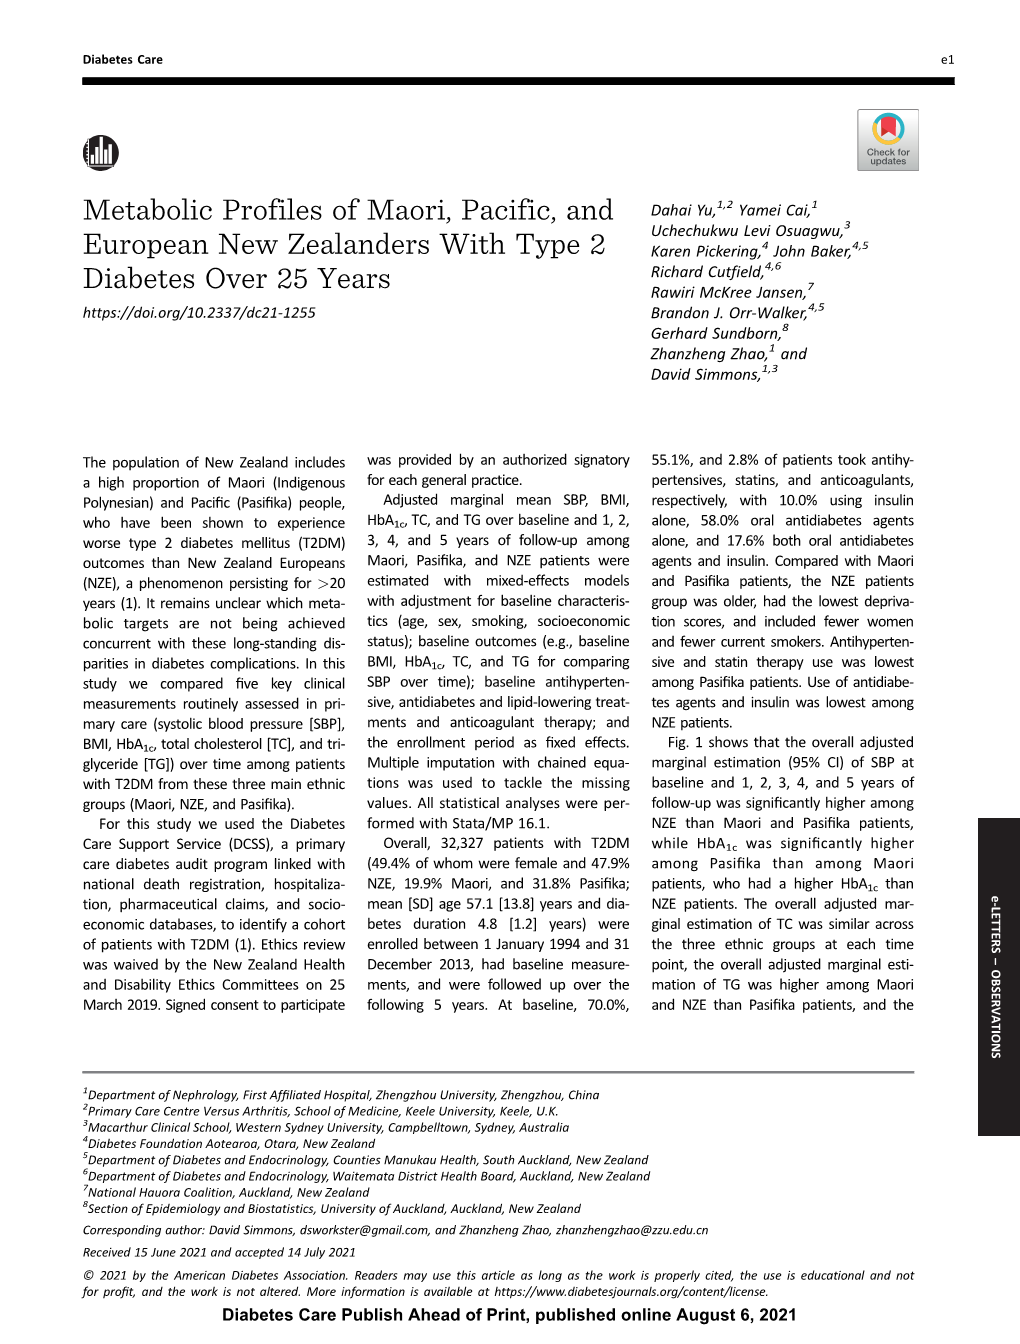 Metabolic Profiles of Maori, Pacific, and European New Zealanders